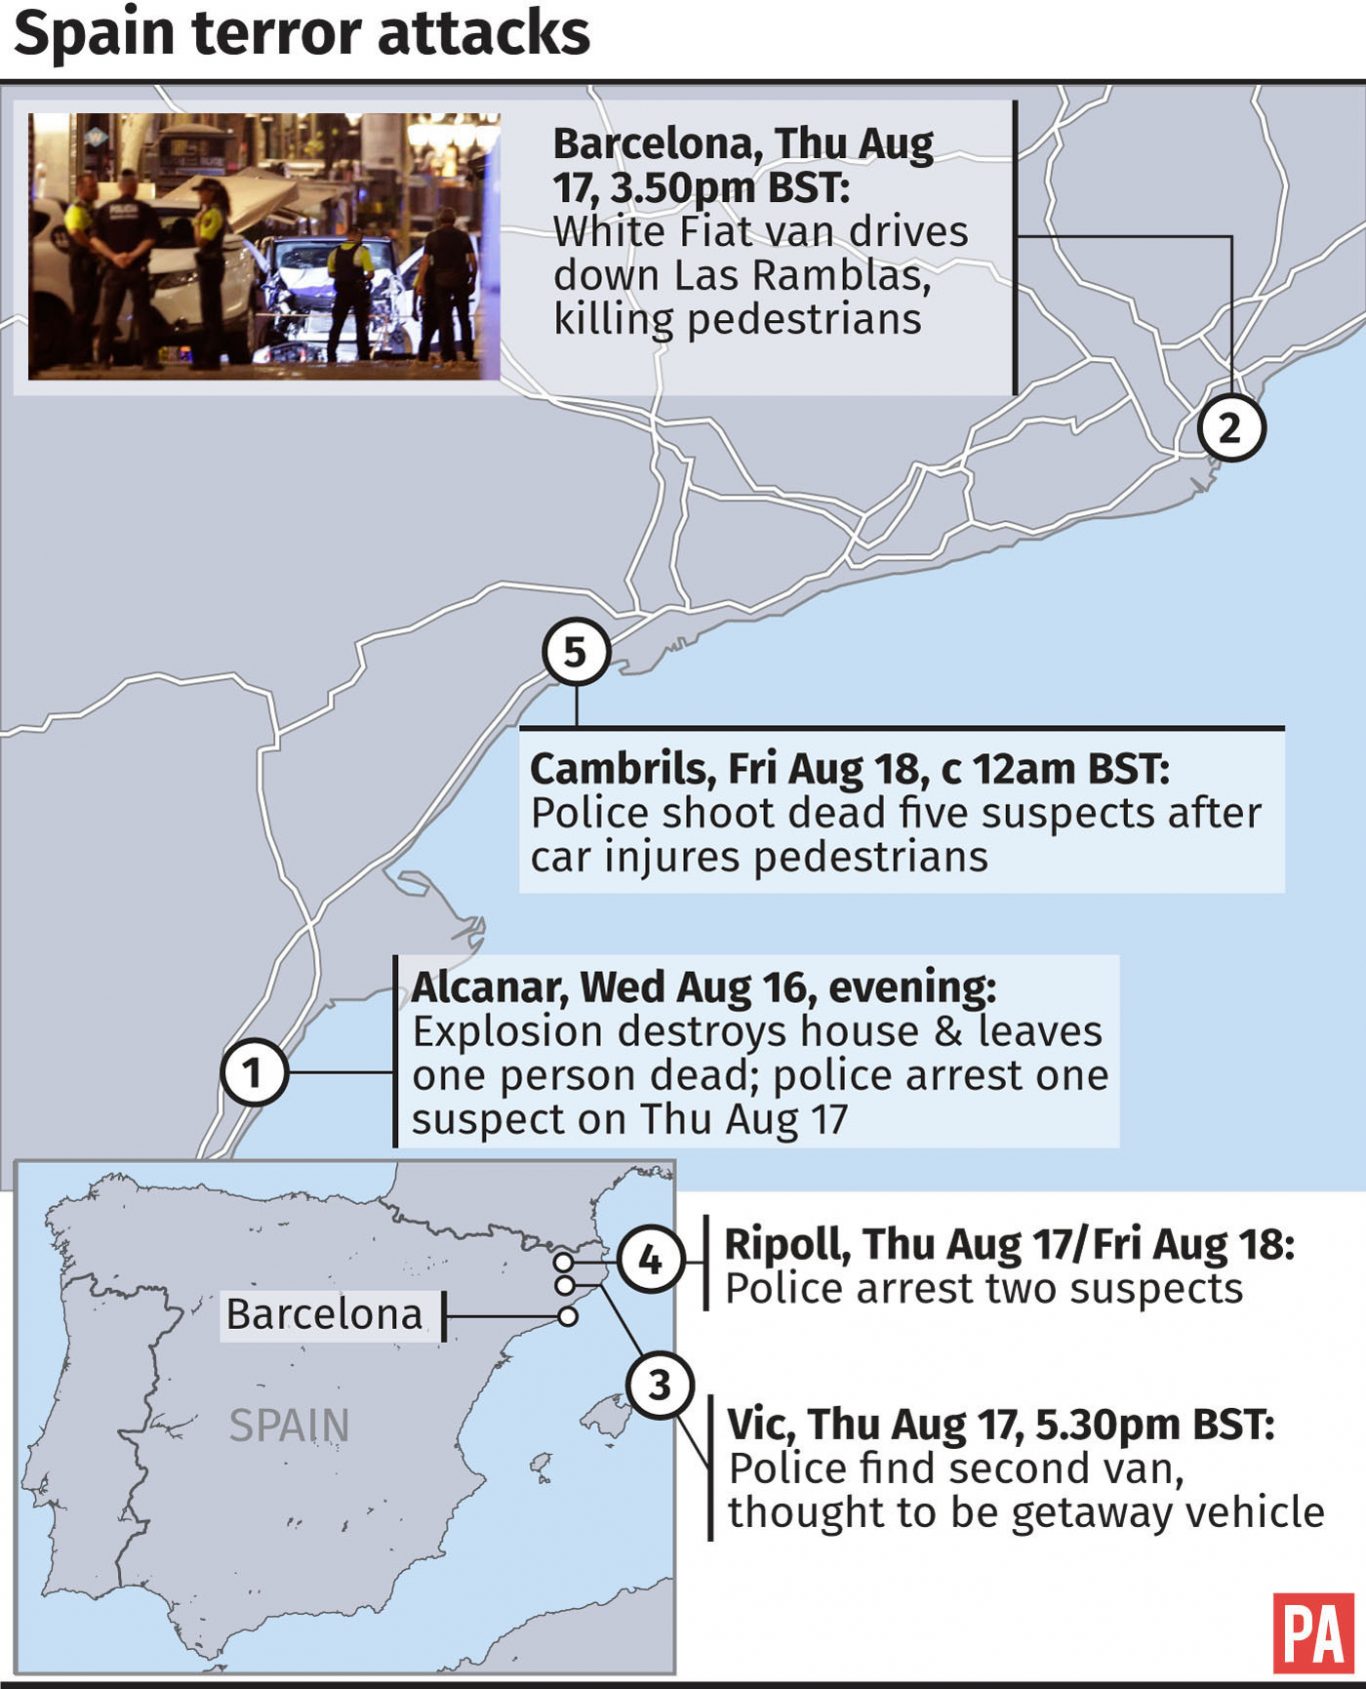 Spain terror attacks key locations mapped.